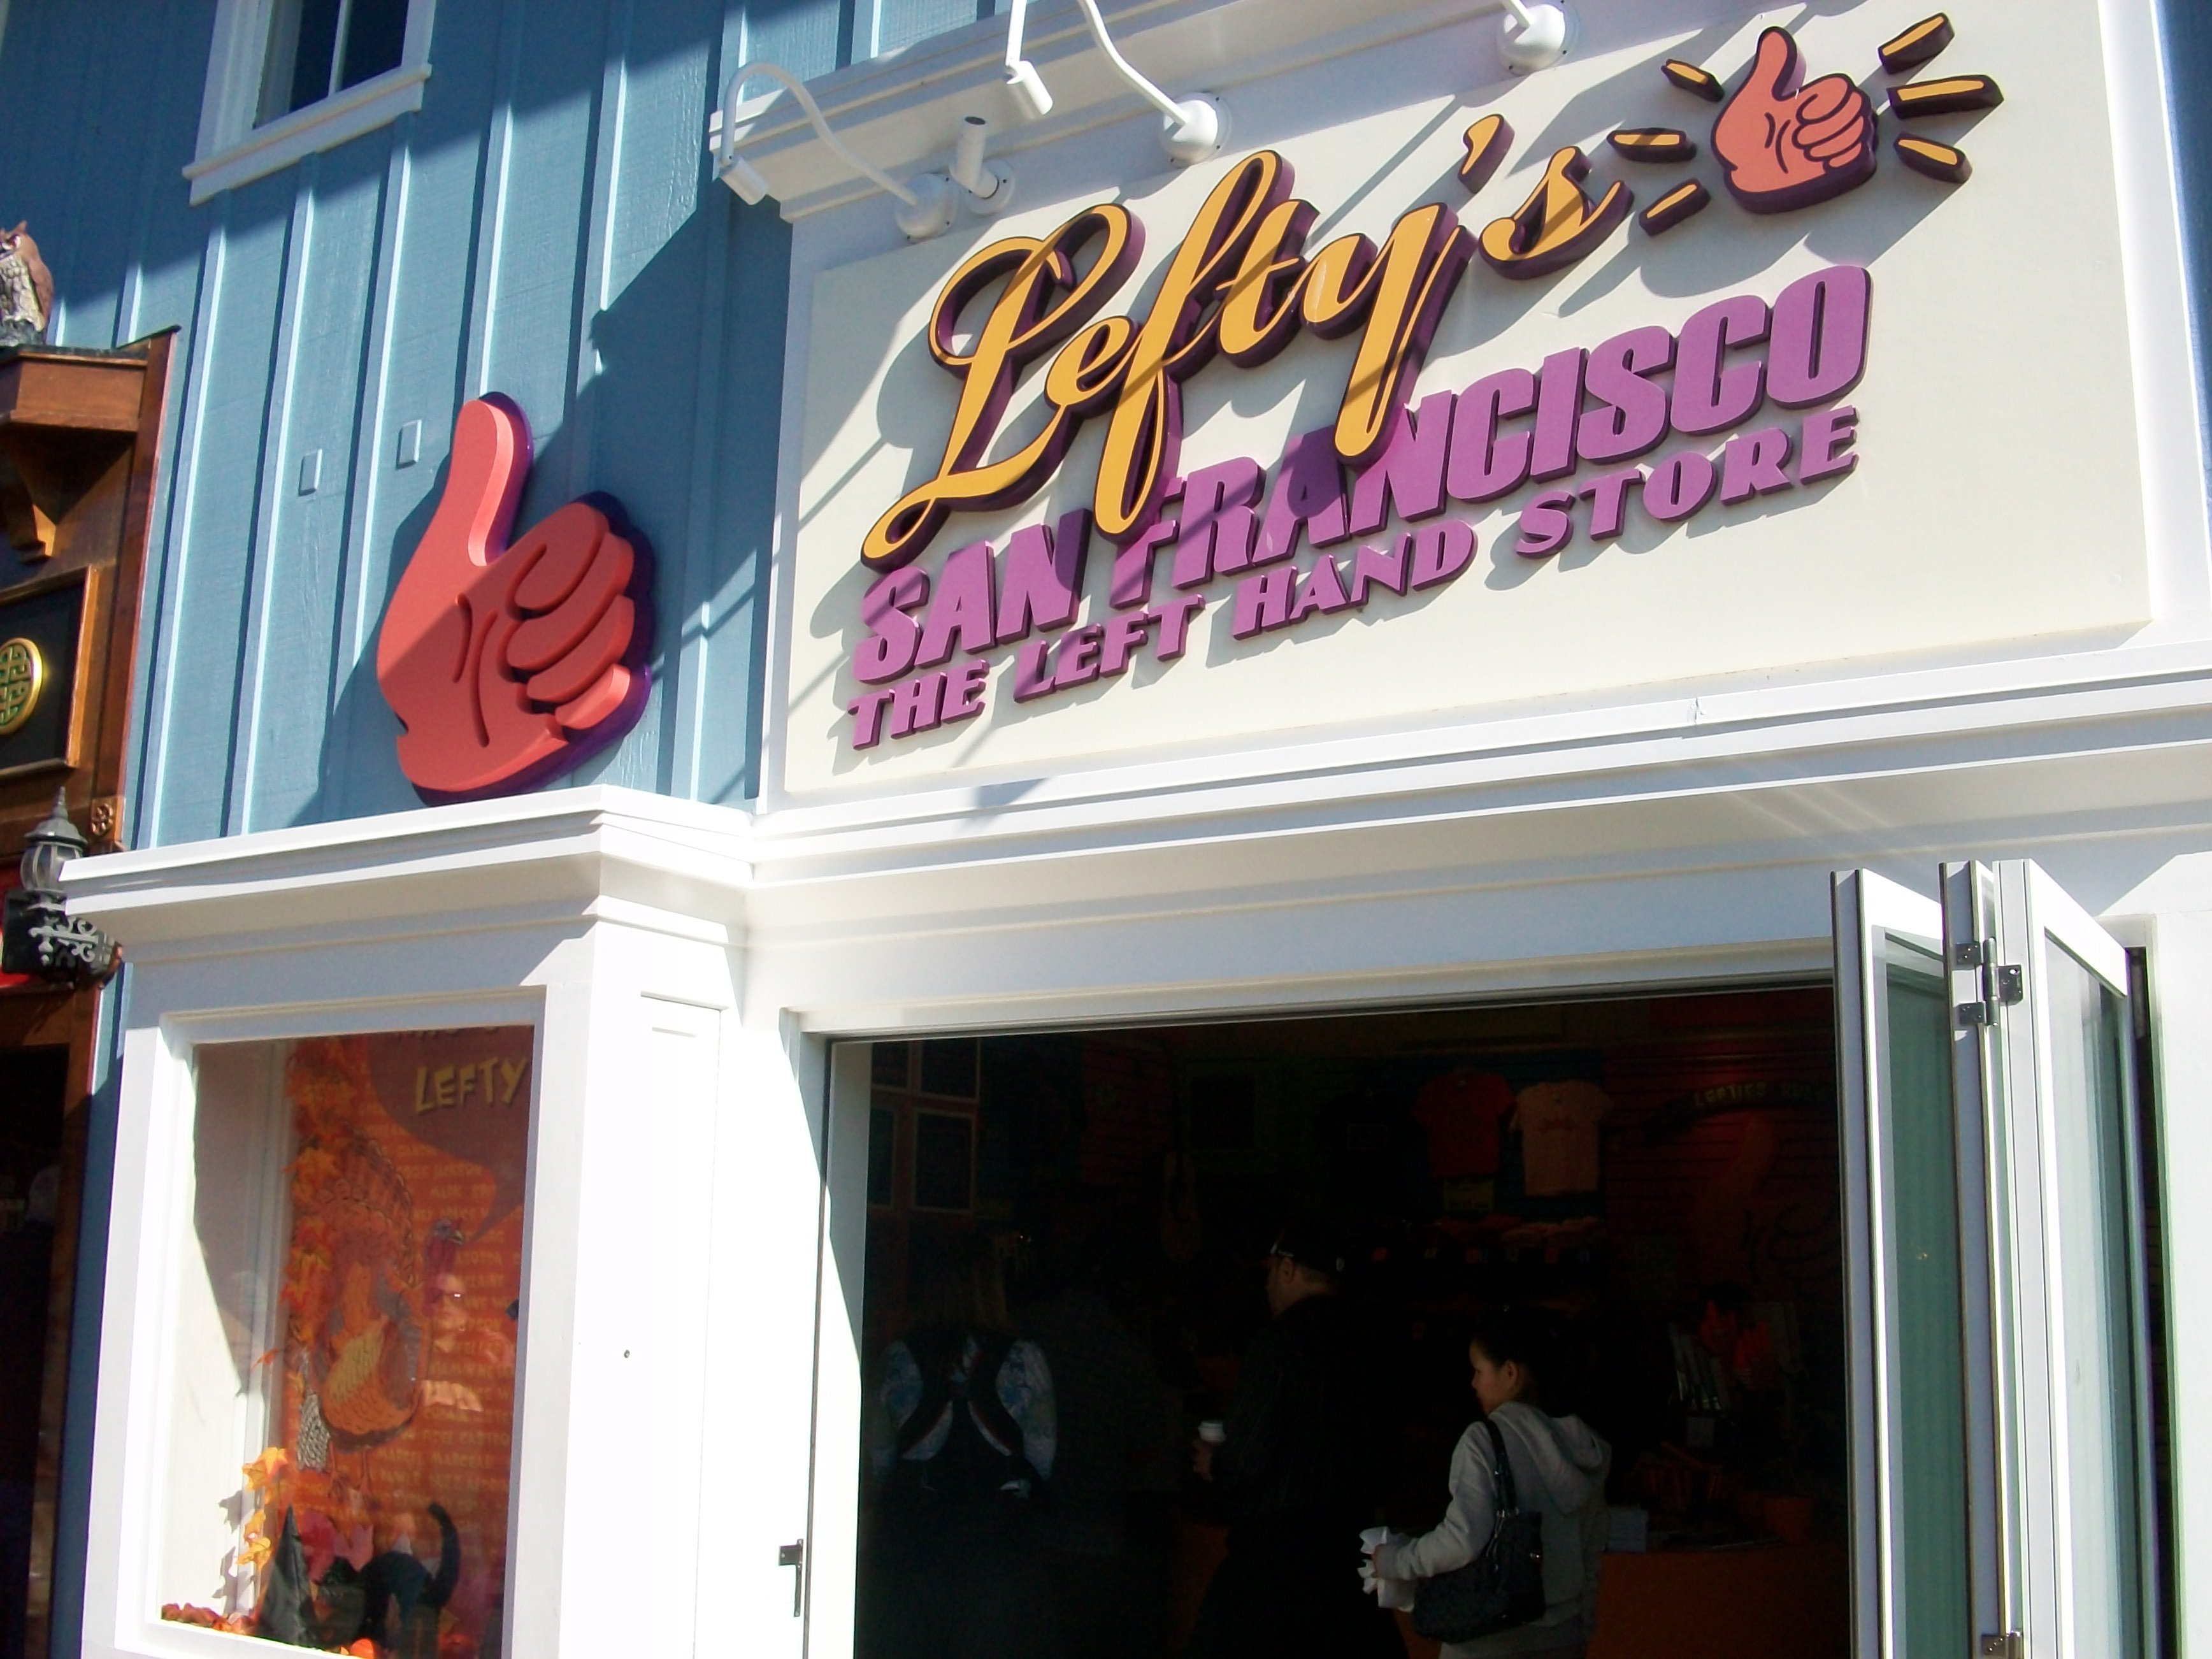 Shop Lefty's in San Francisco: 2 reviews and 3 photos